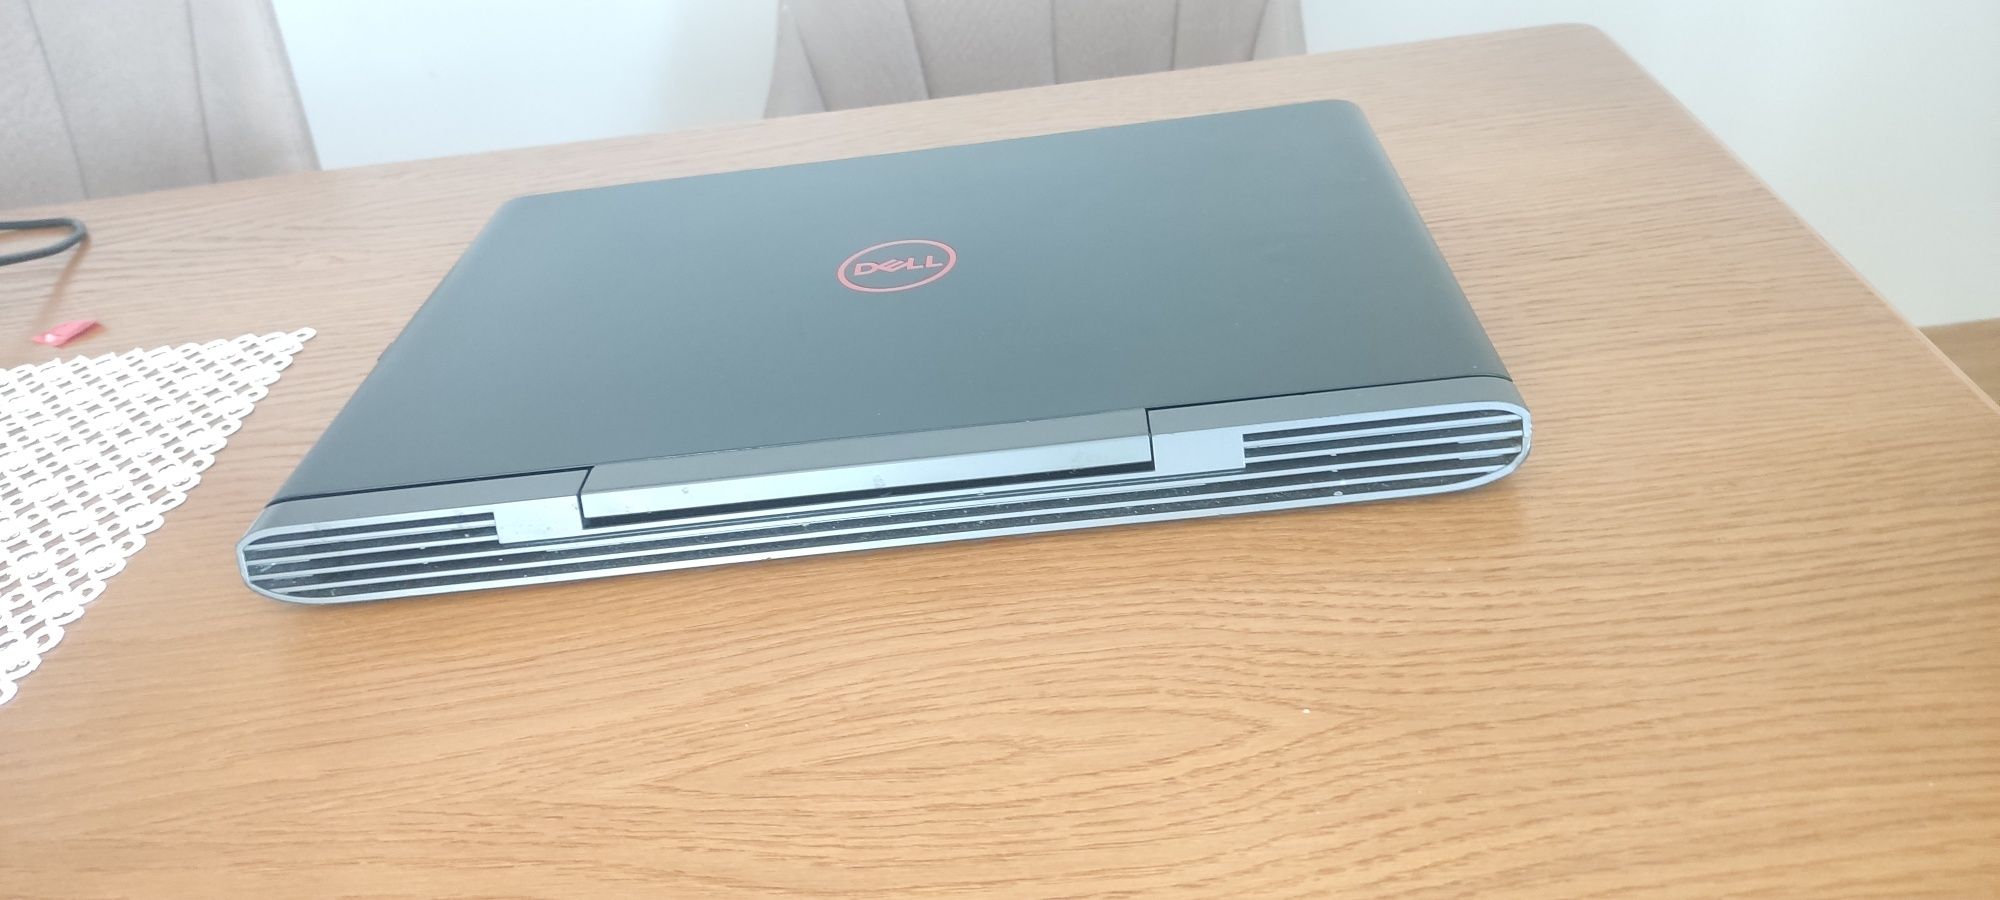 Sprzedam laptopa Dell Inspiron 15-7000 Gaming